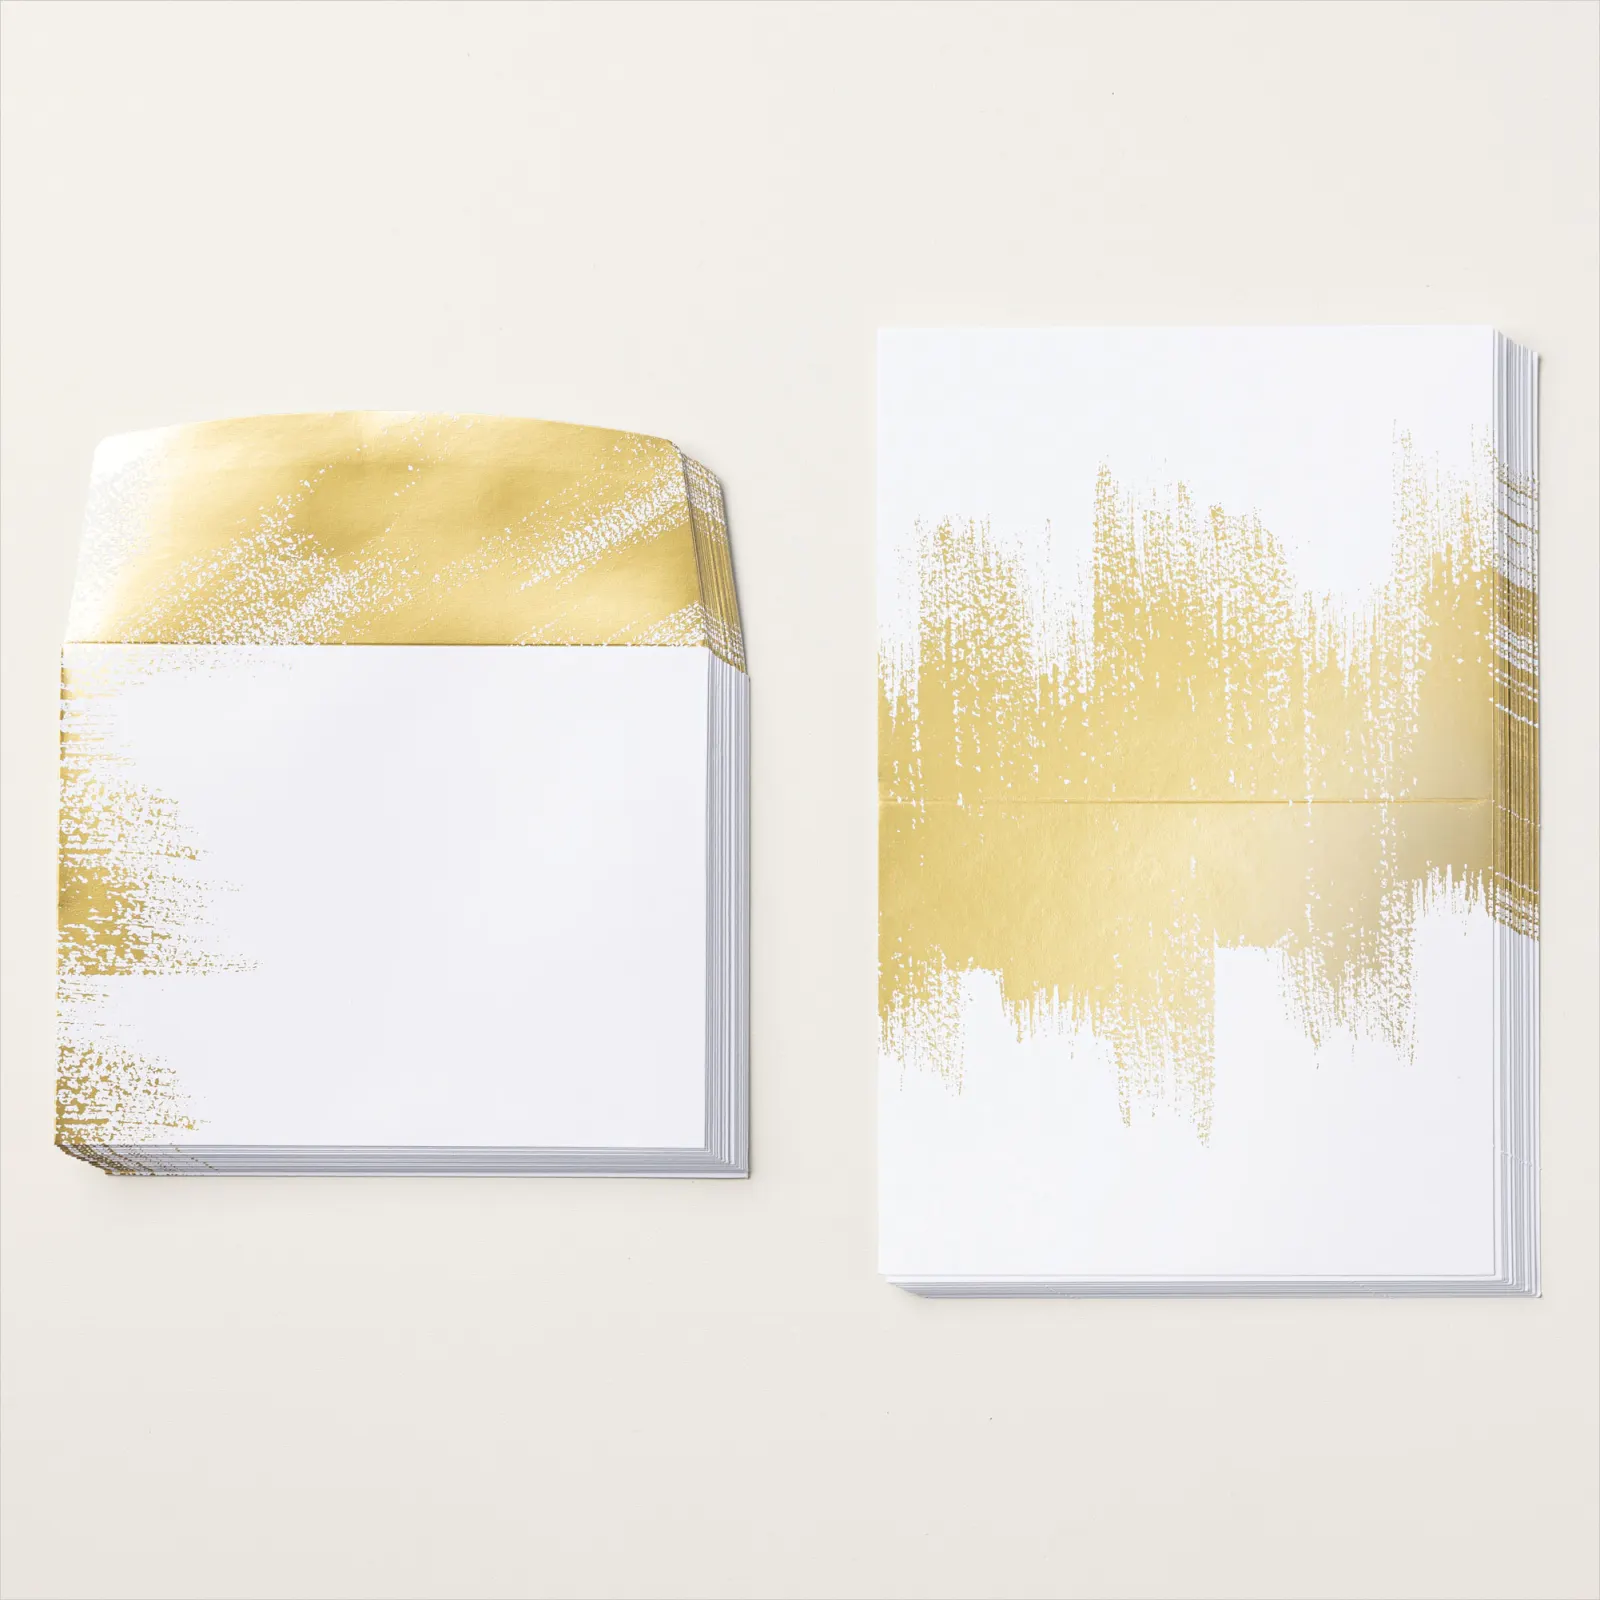 Brushed Gold cards and envelopes